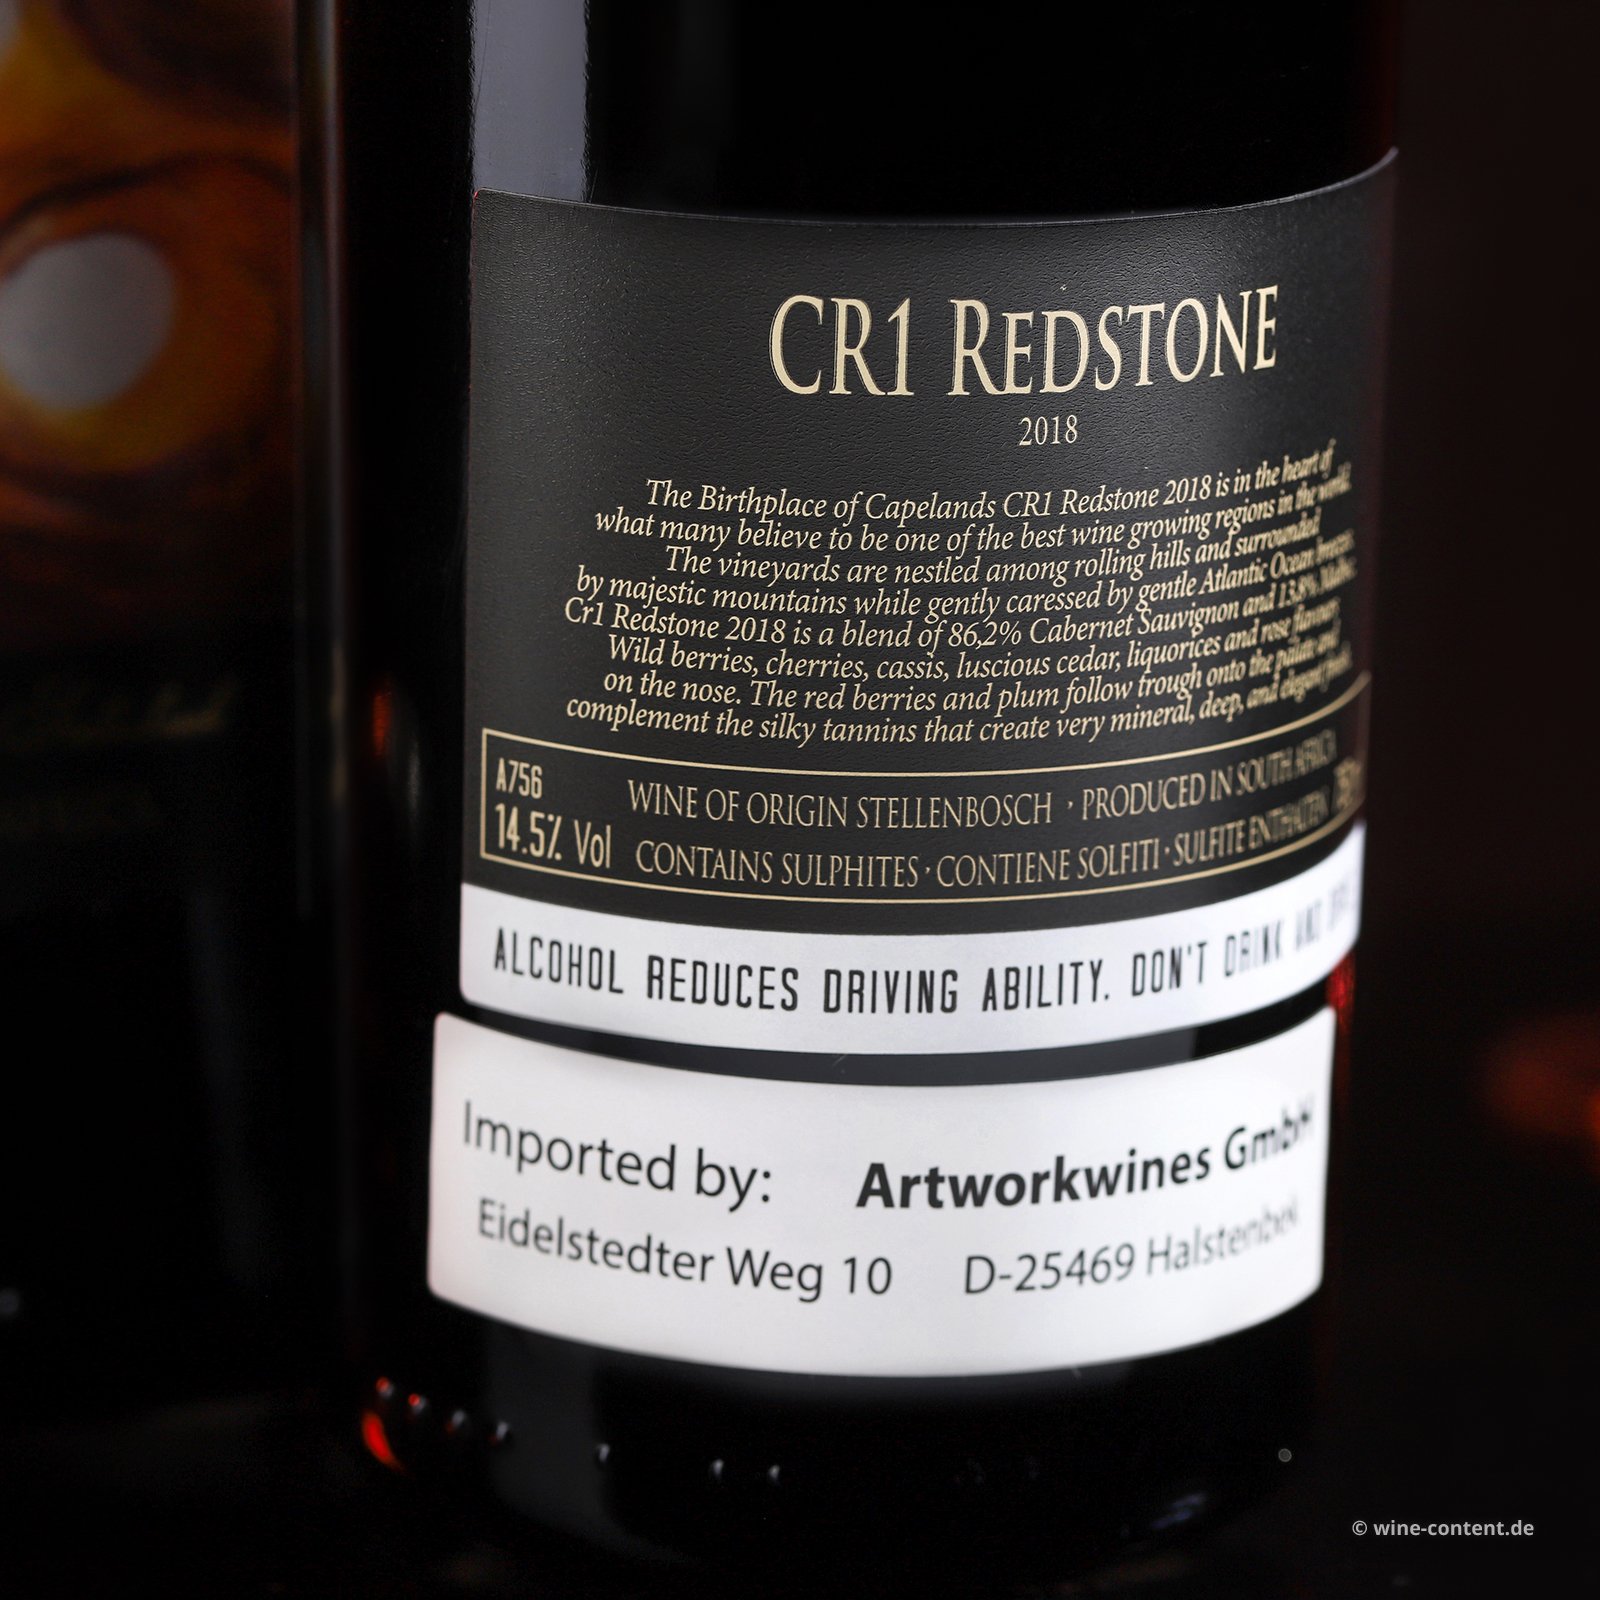 CR1 Redstone 2018